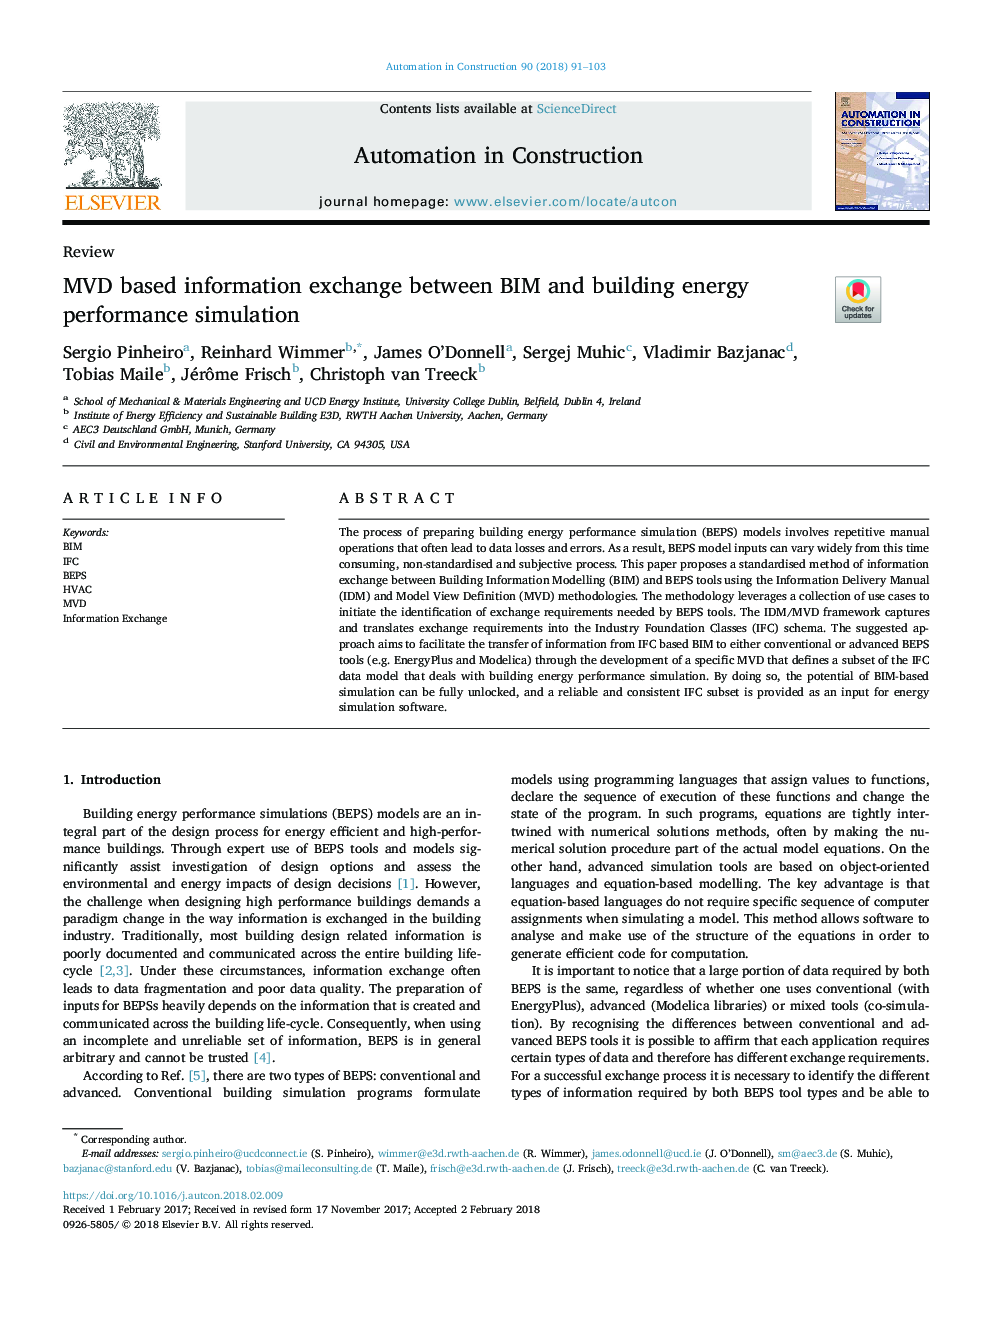 MVD based information exchange between BIM and building energy performance simulation